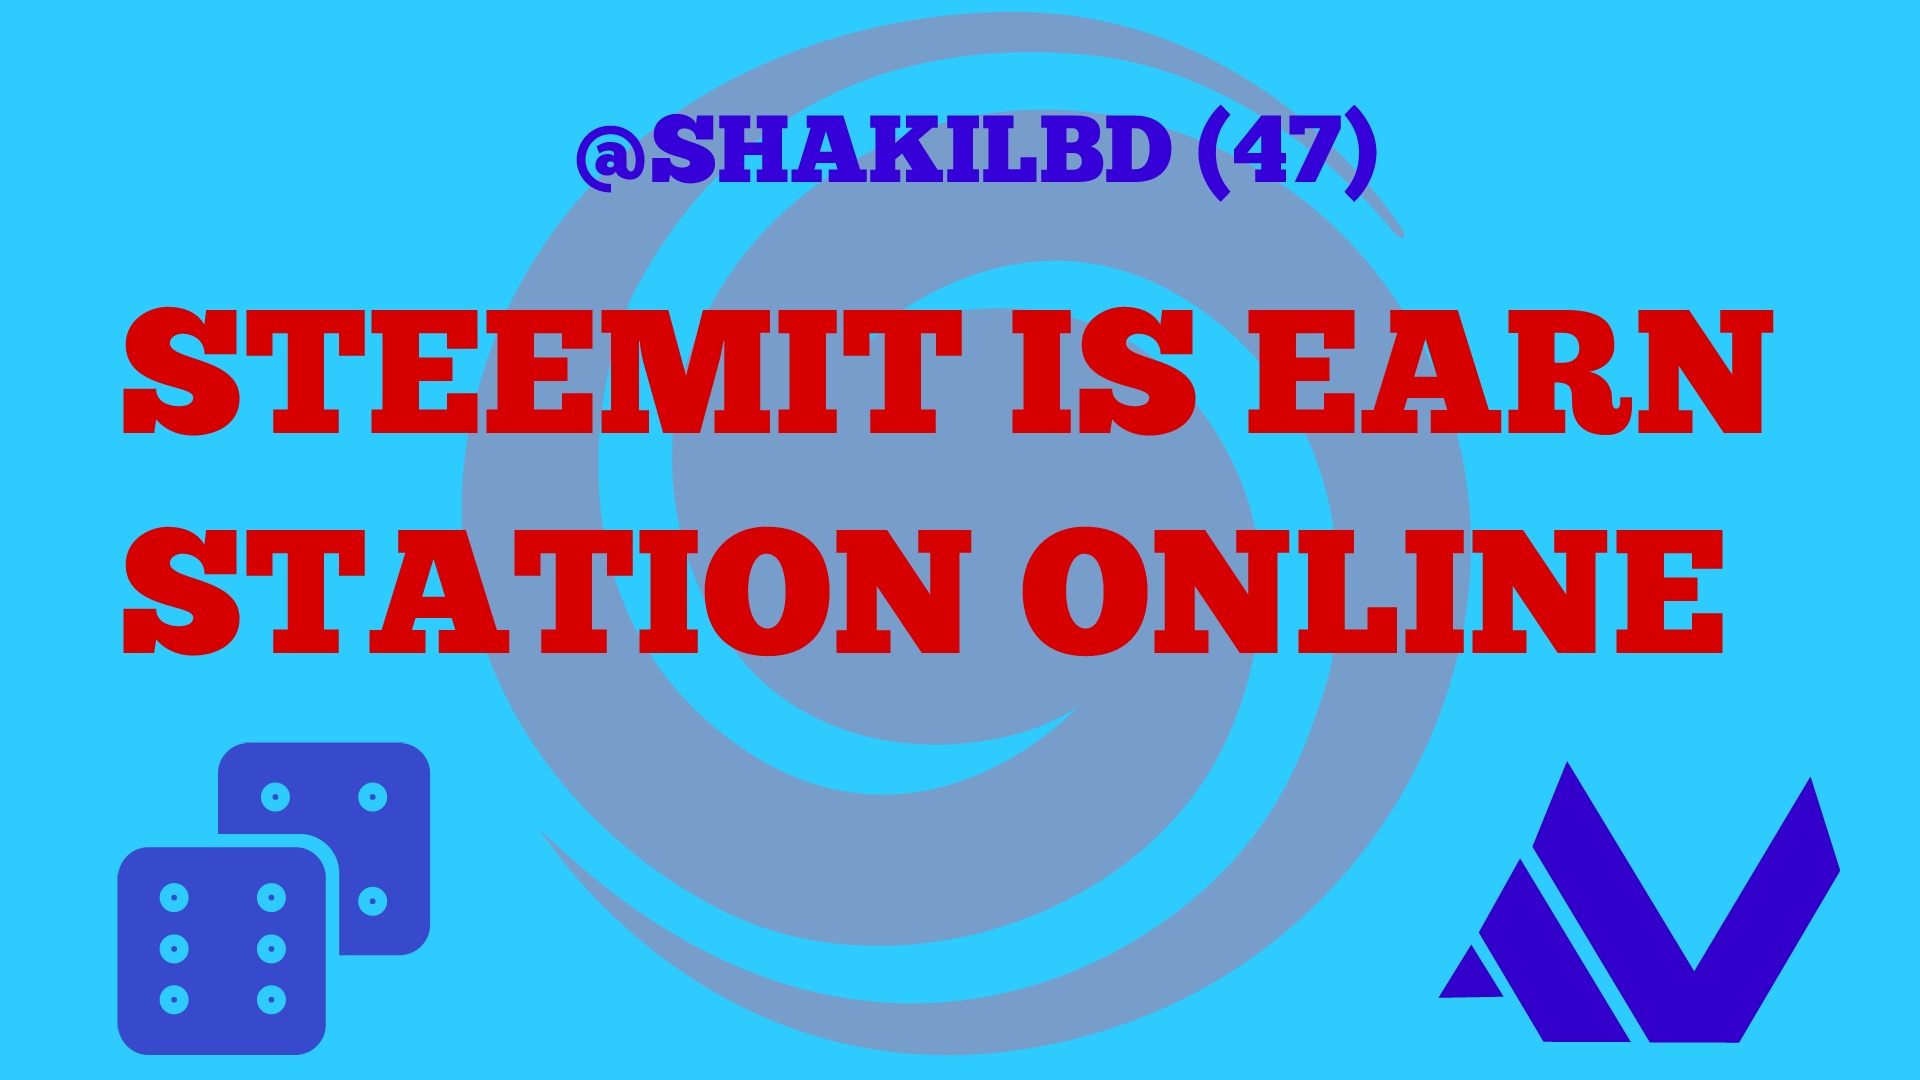 steemit is earn station online.jpg